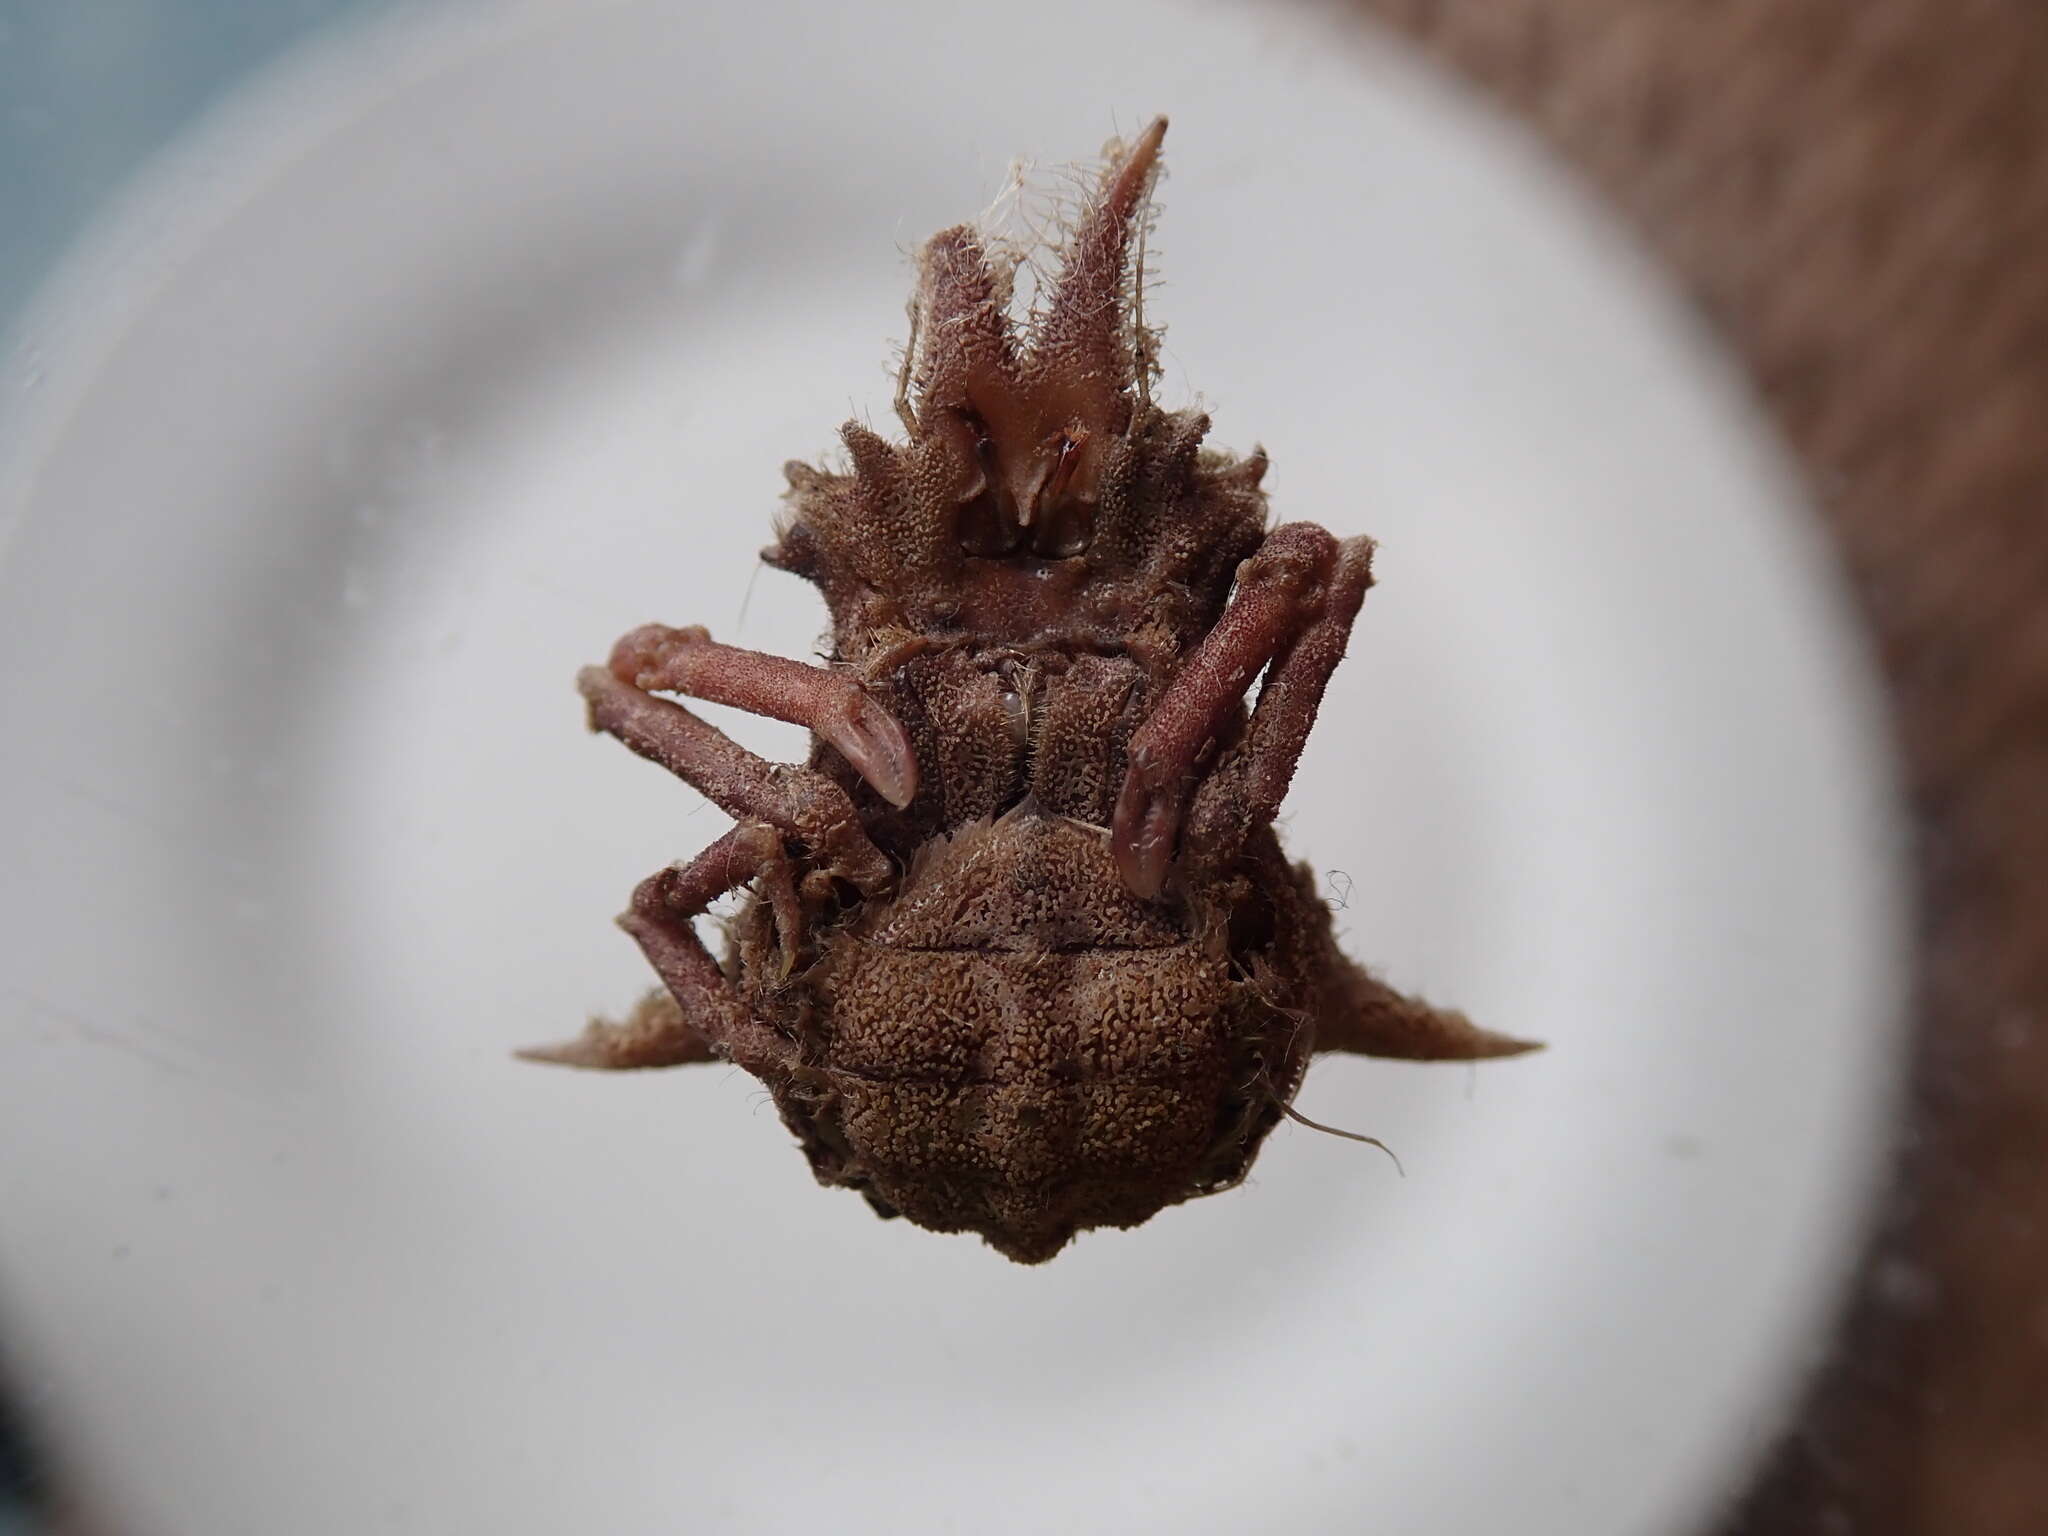 Image of Florida decorator crab